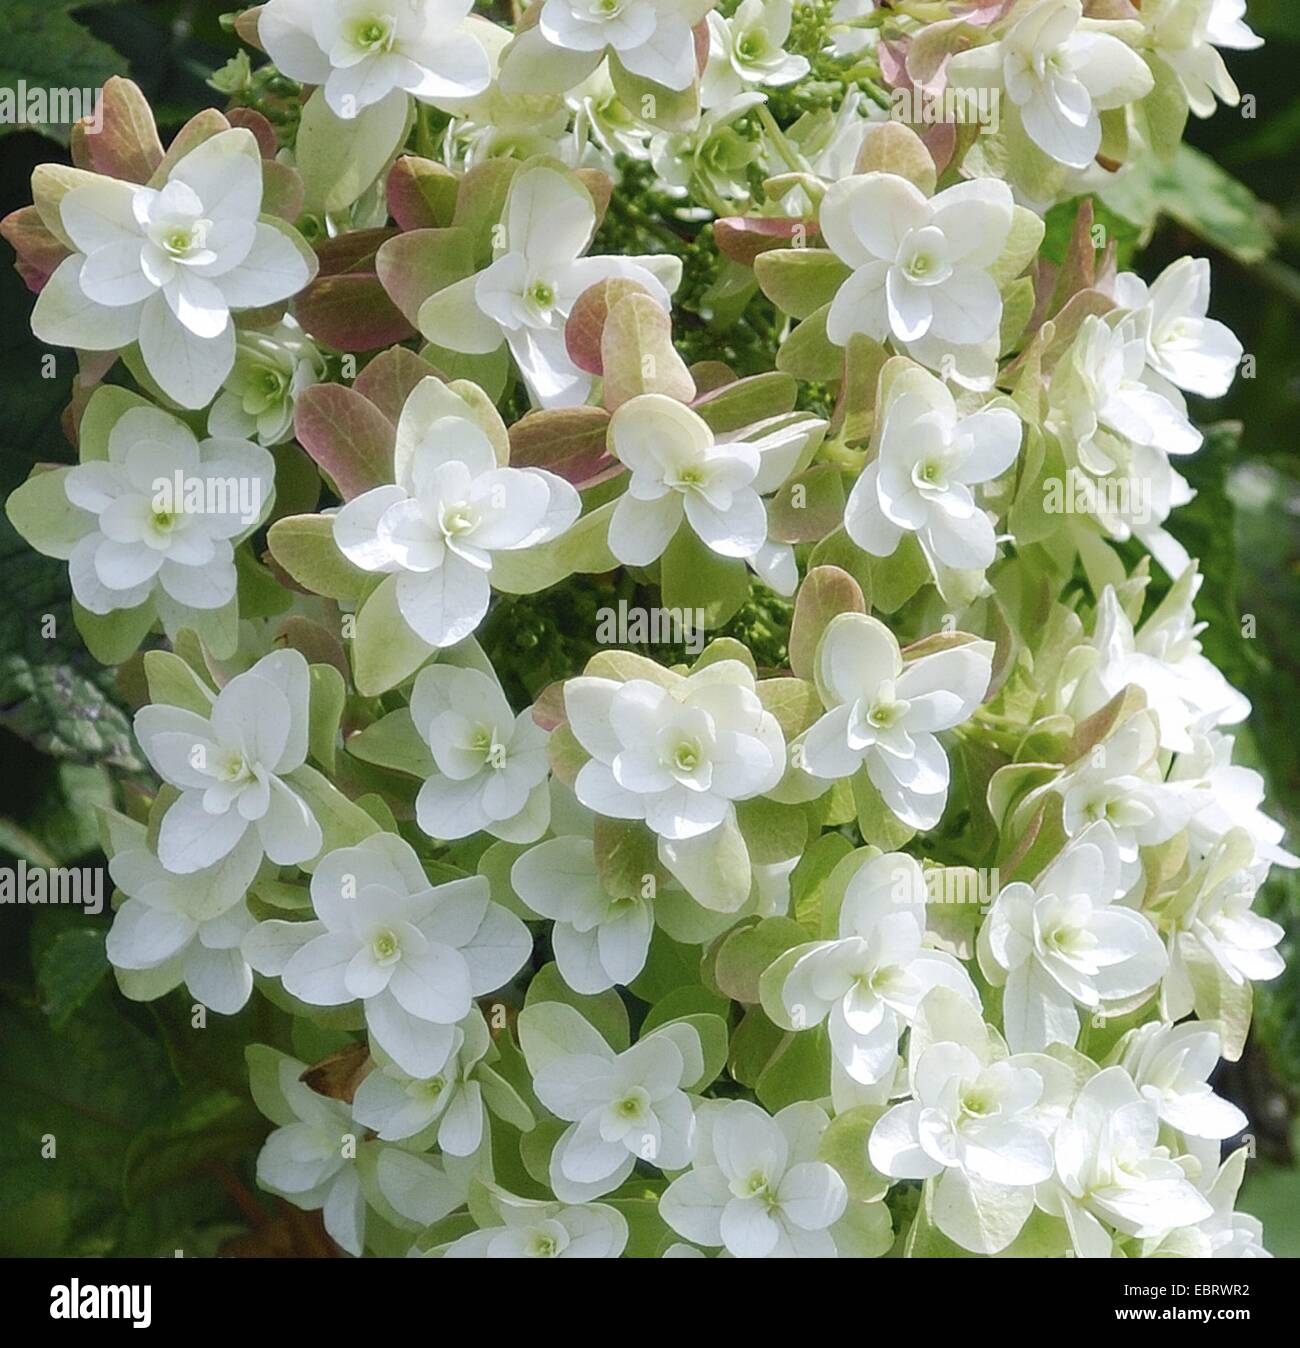 Oak-leaved hydrangea (Hydrangea quercifolia 'Snowflake', Hydrangea quercifolia Snowflake), cultivar Snowflake, blooming Stock Photo